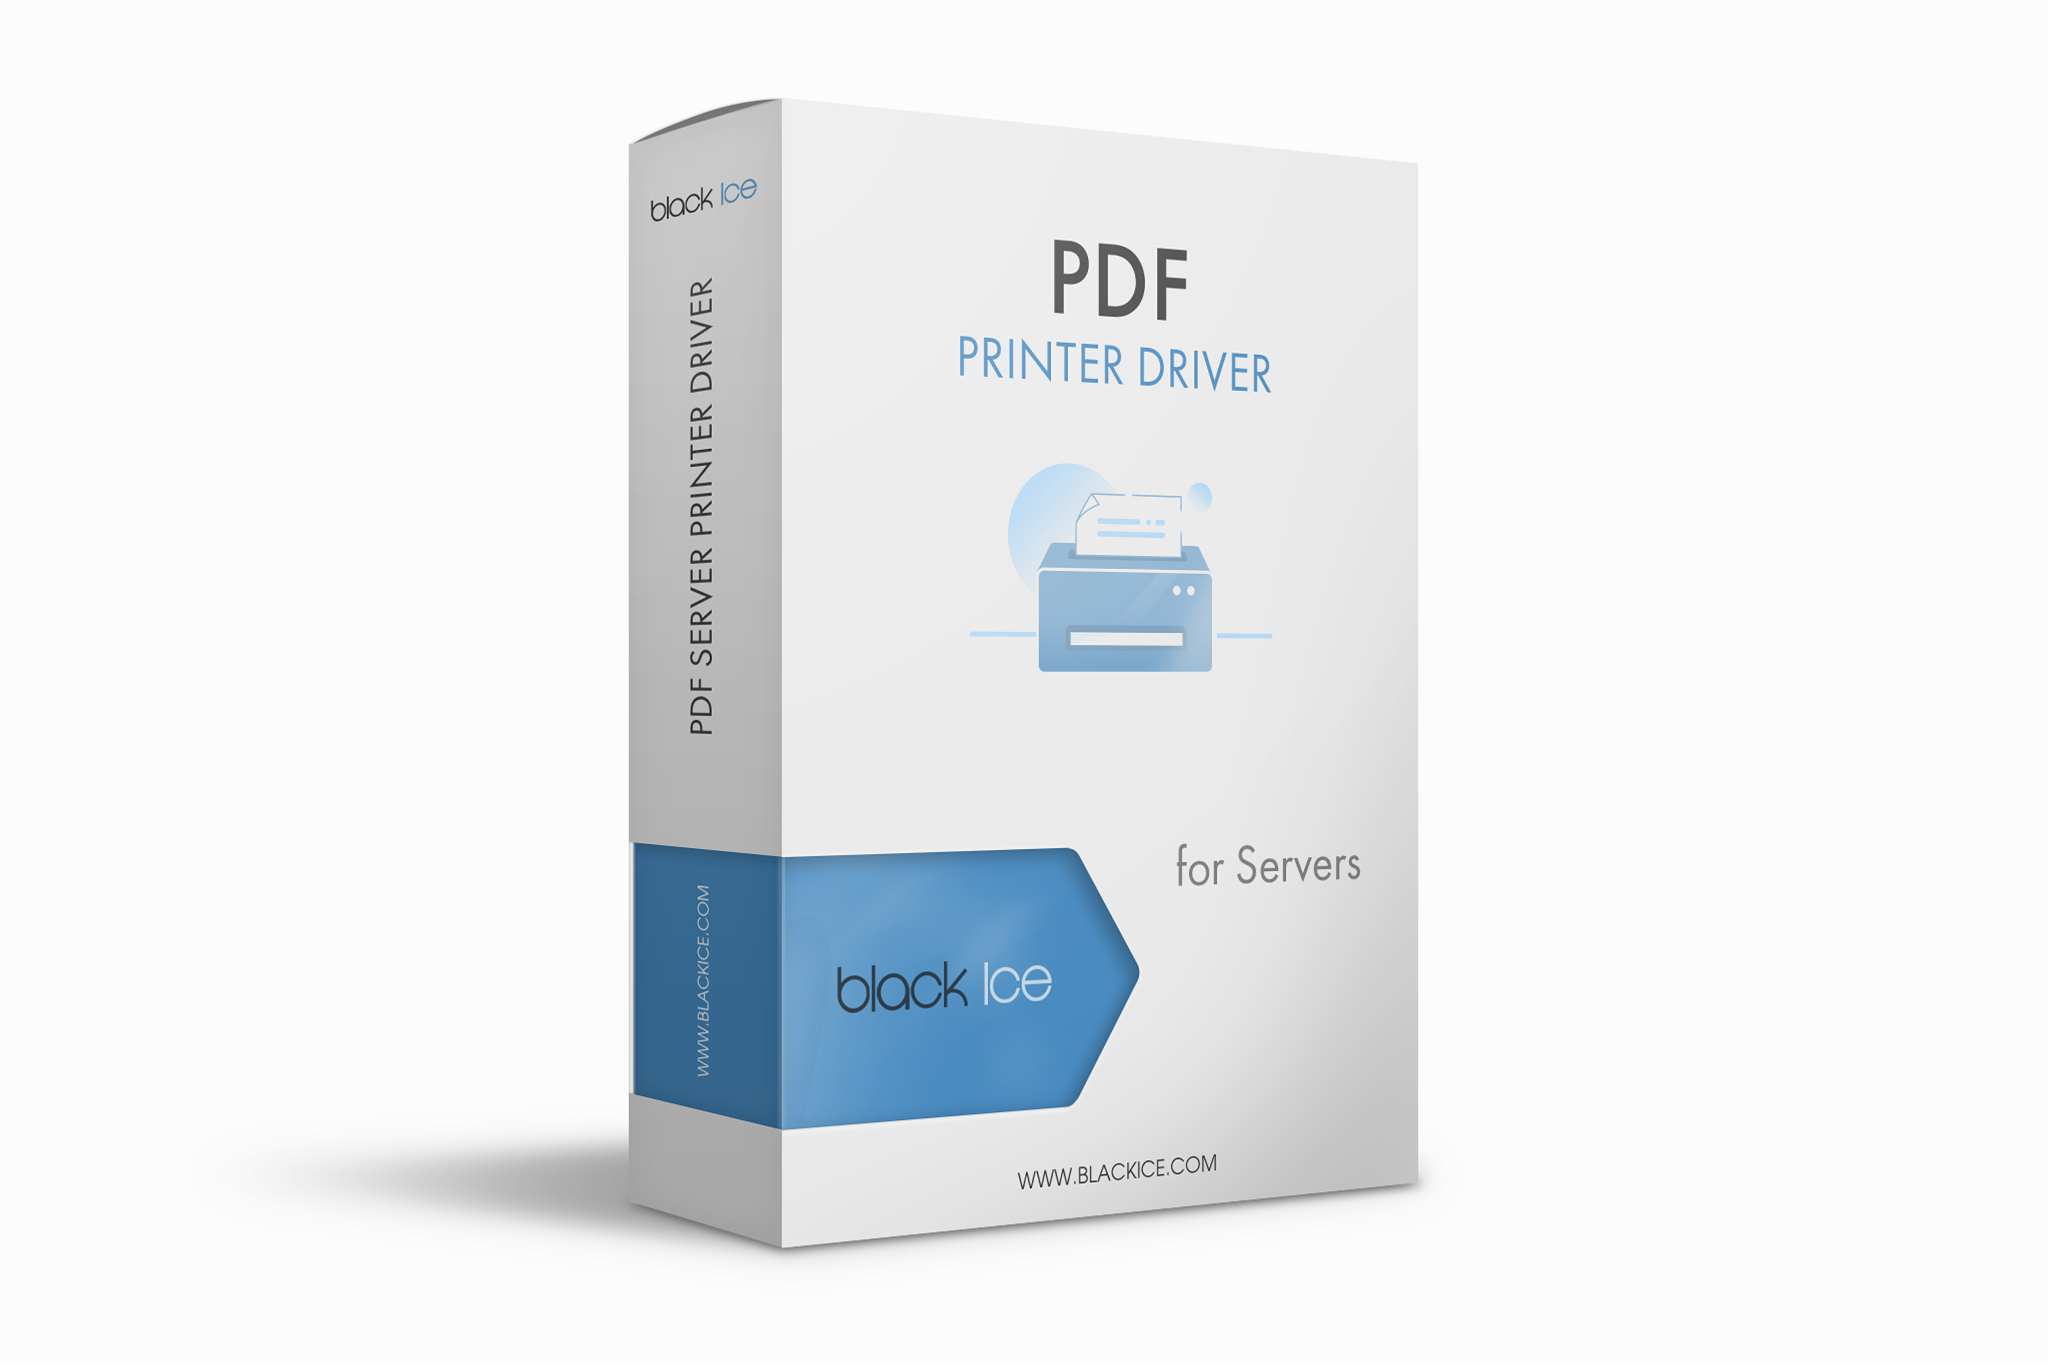 PDF Printer Driver Server Subscription (Single Server and 4 multi-printers or threads)